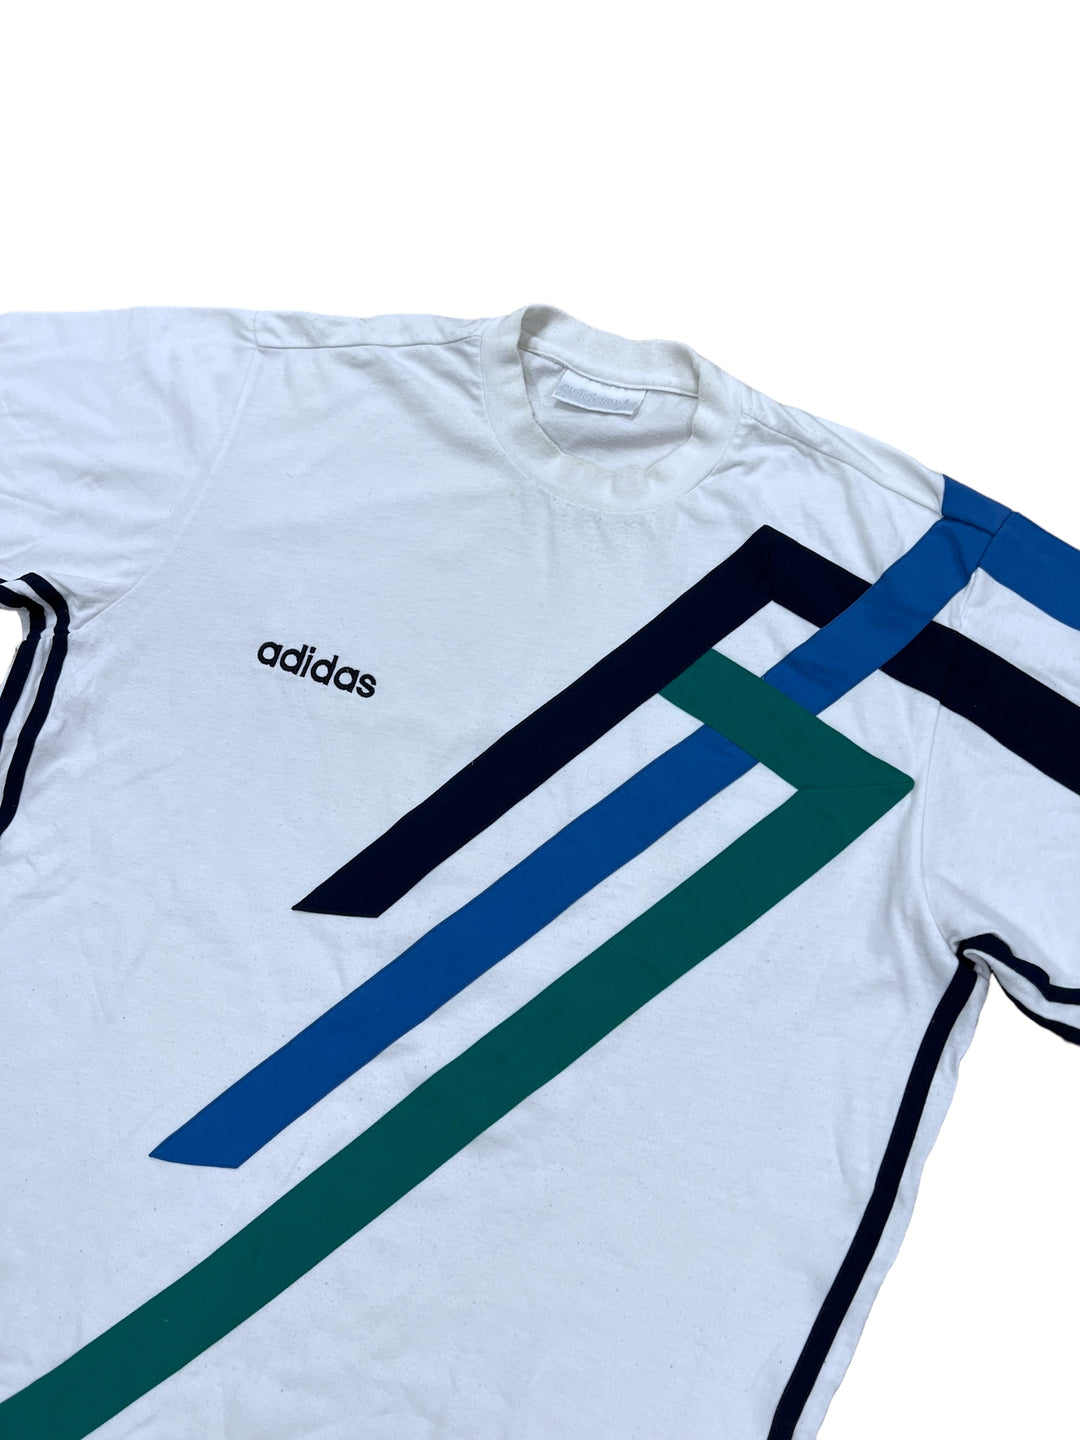 Adidas vintage 90’s Tshirt Men's Large